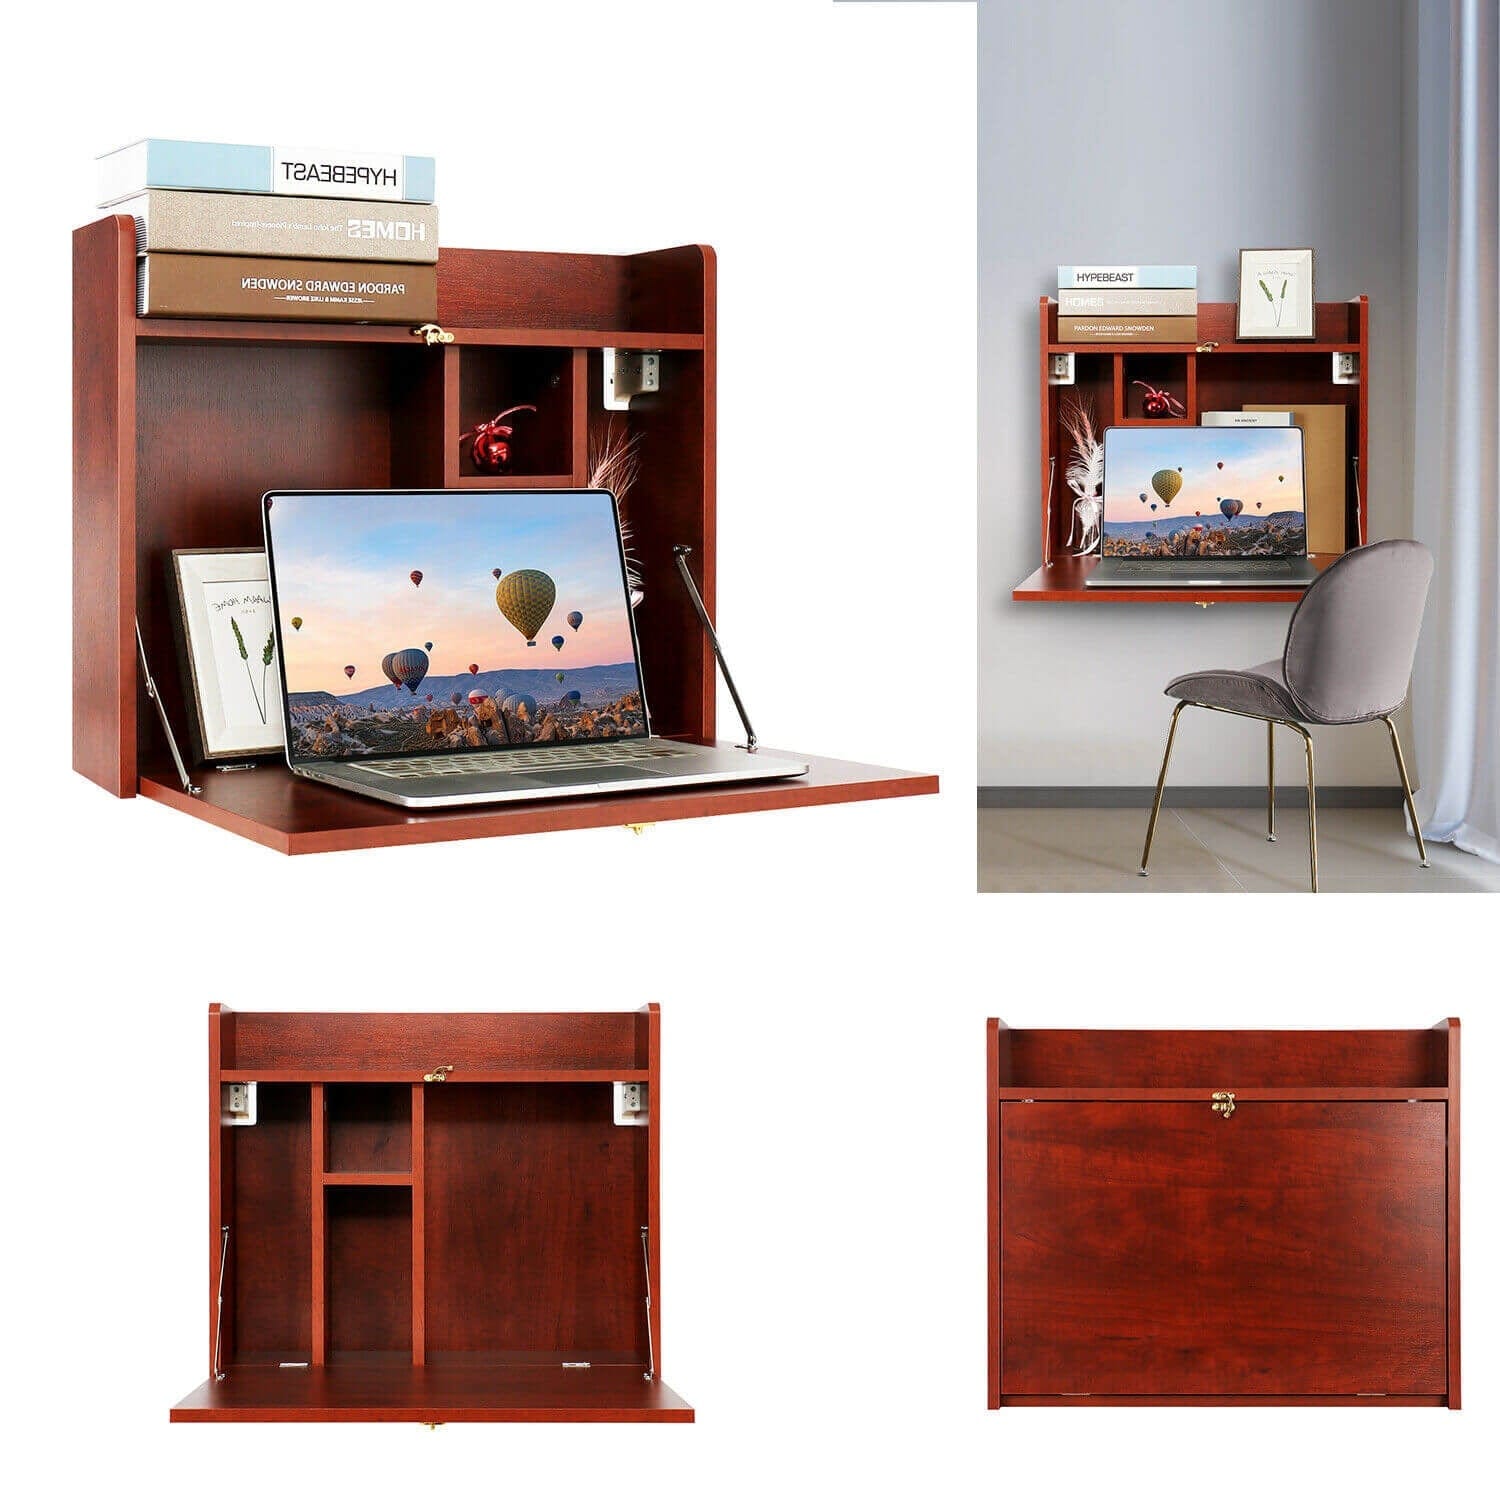 Elecwish Wall Mounted Table Foldable Storage Shelf Wall-Mounted Desk HW1138 Details